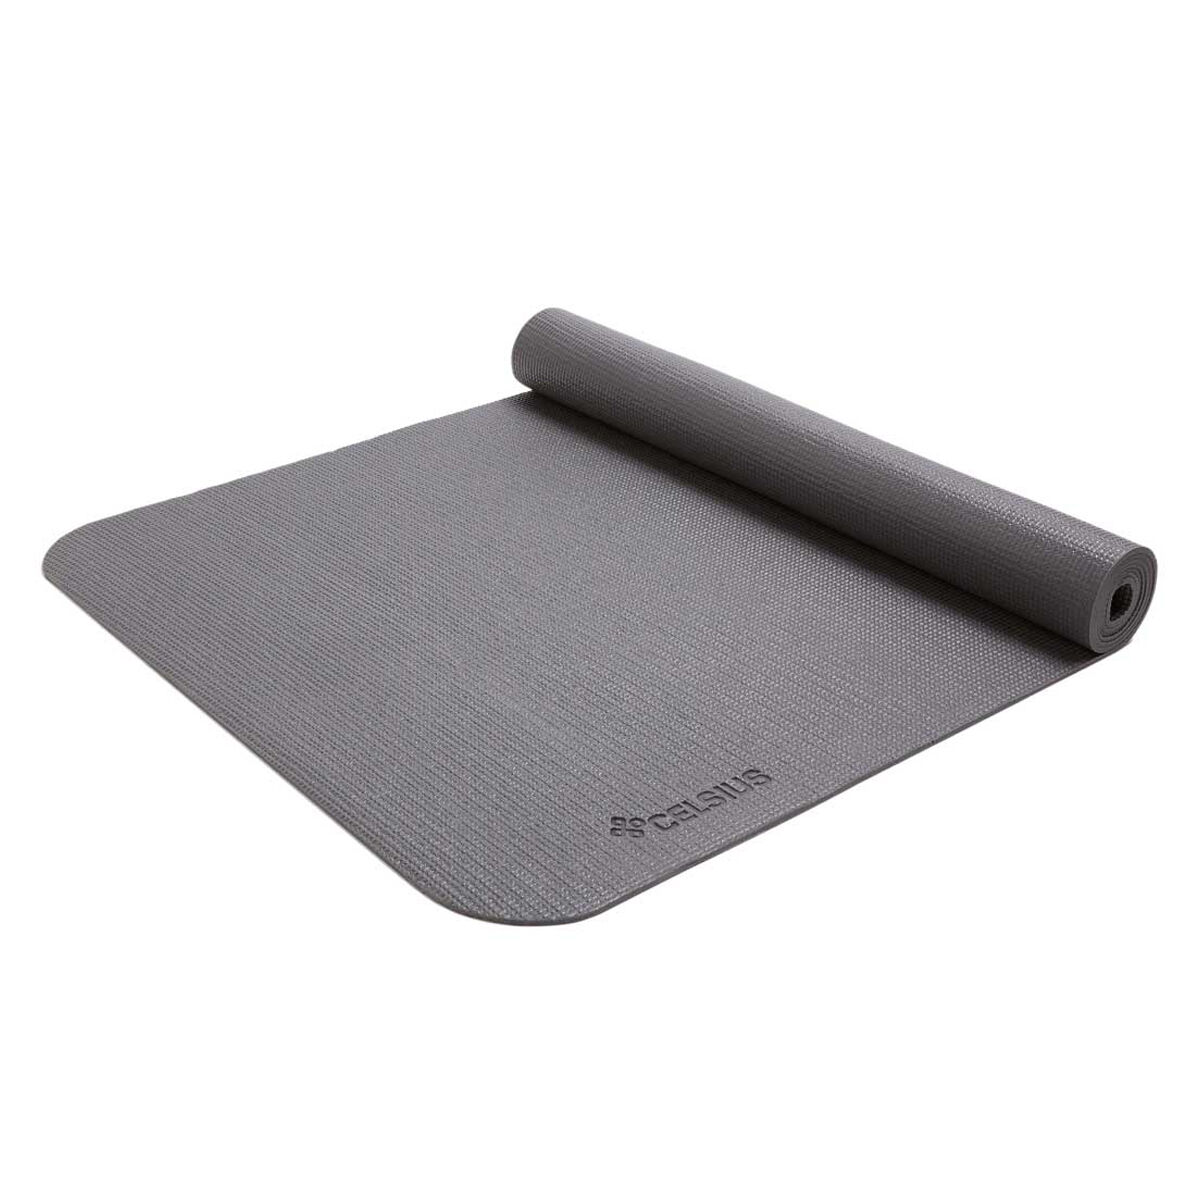 cheap black yoga mat